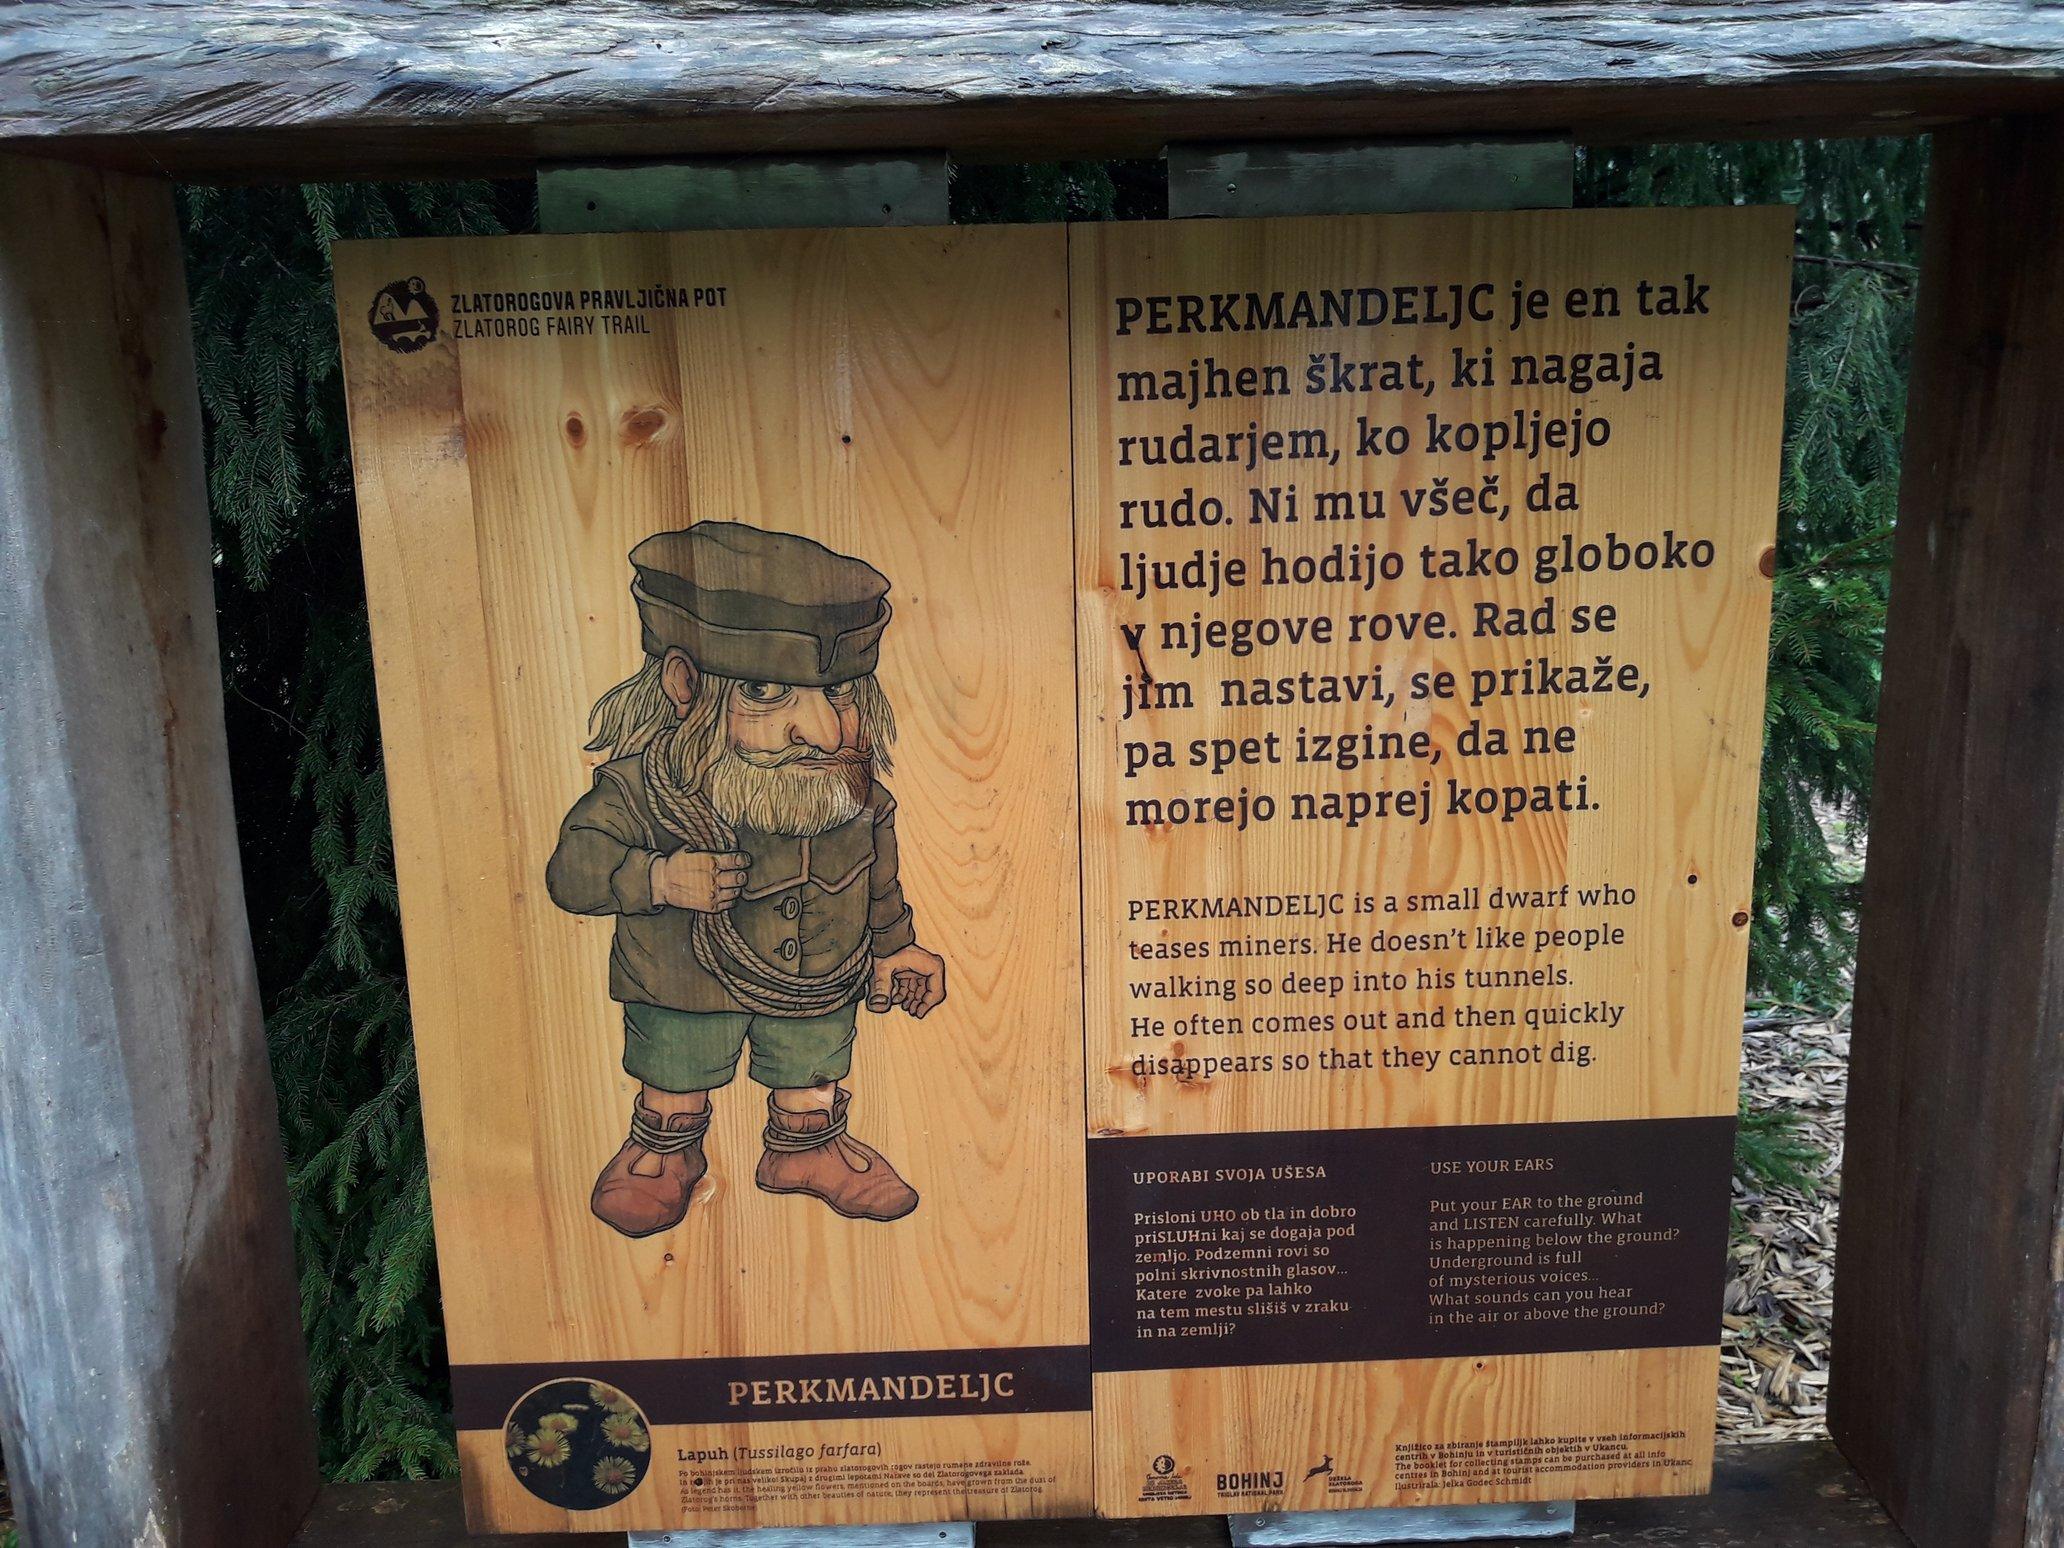 Perkmandeljc Slovenia 2019